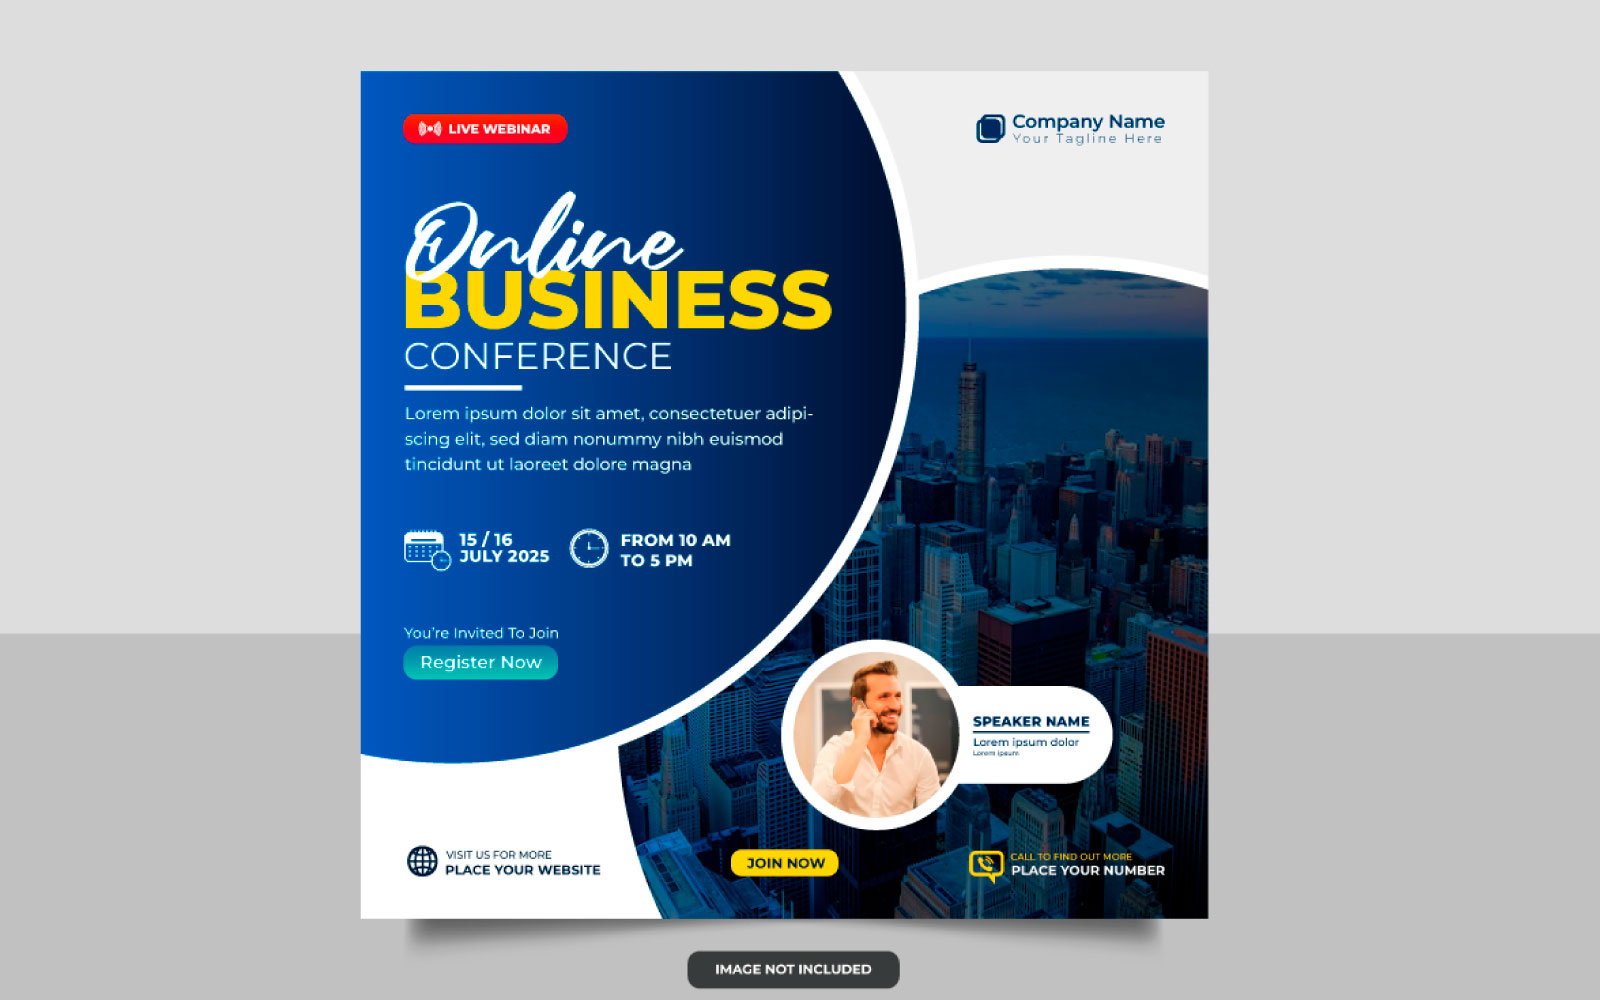 Business conference flyer or horizontal flyer and invitation banner live webinar idea